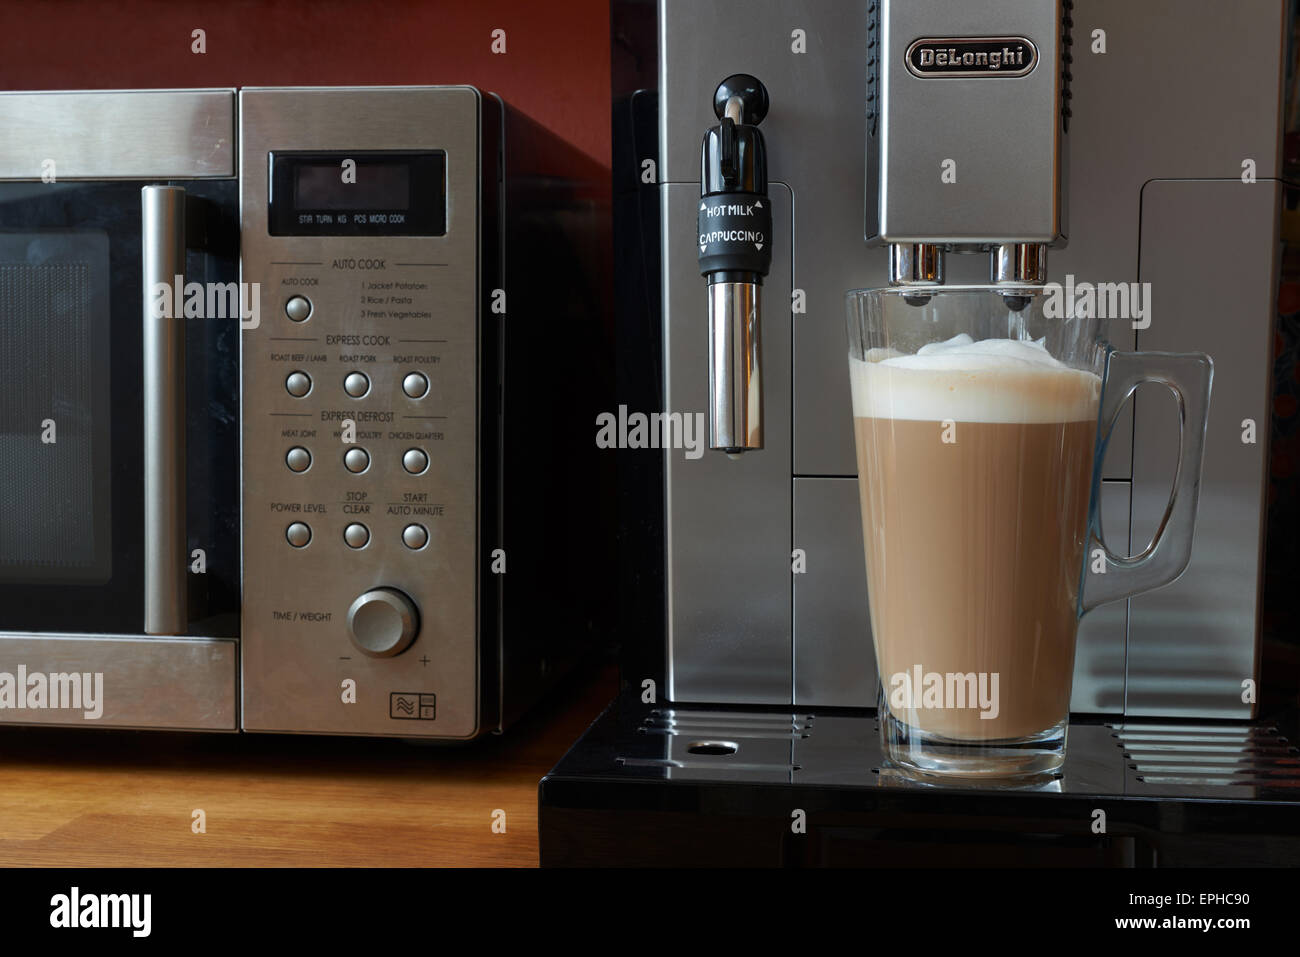 DeLonghi Eletta Plus coffee machine Stock Photo - Alamy